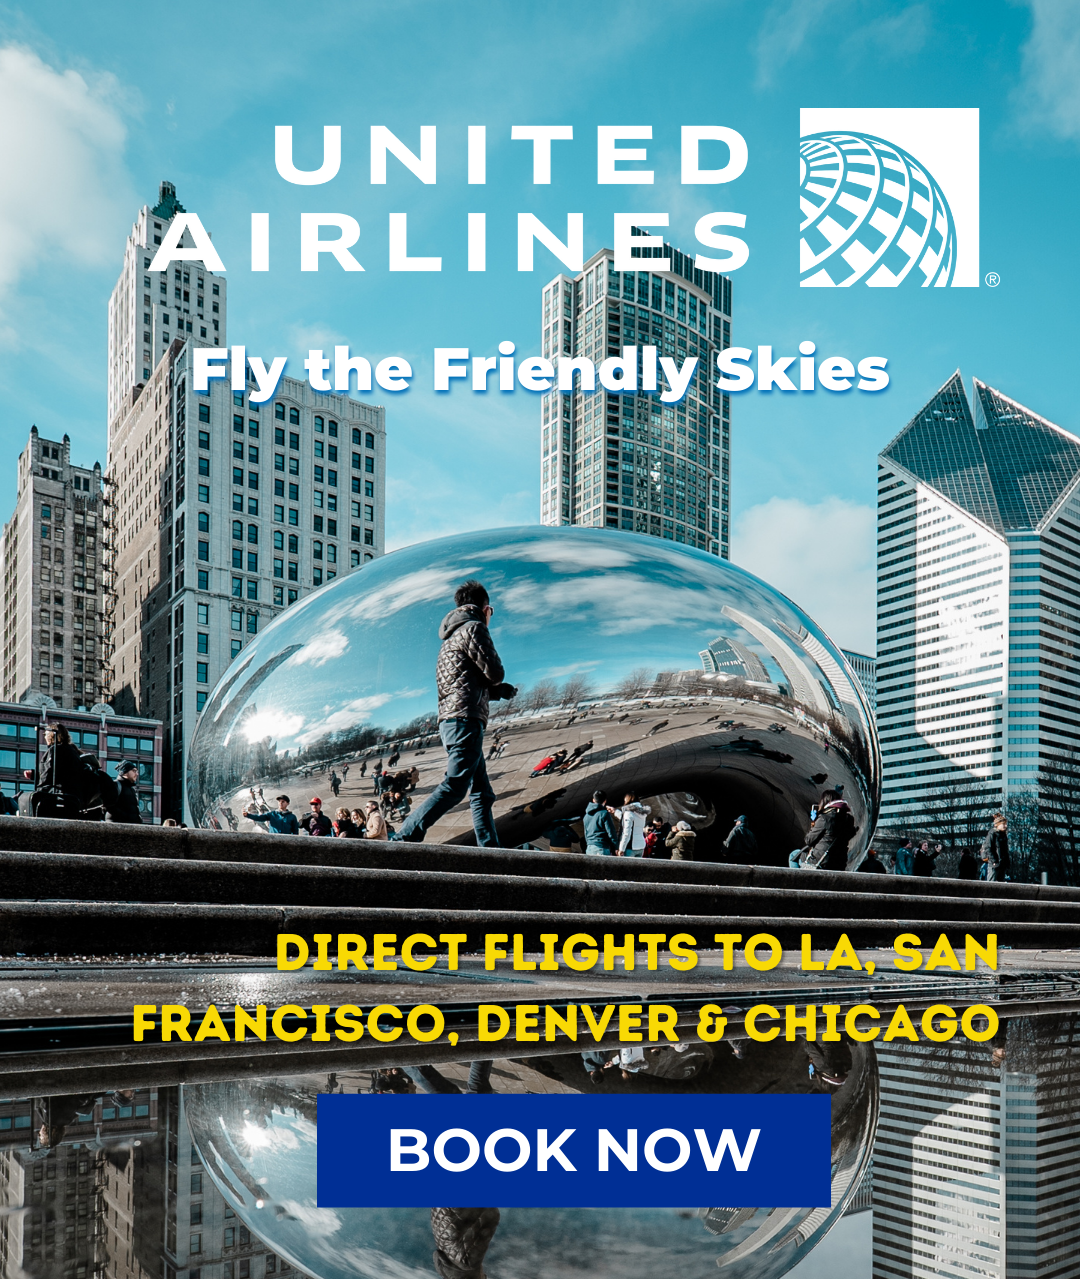 United Direct flights